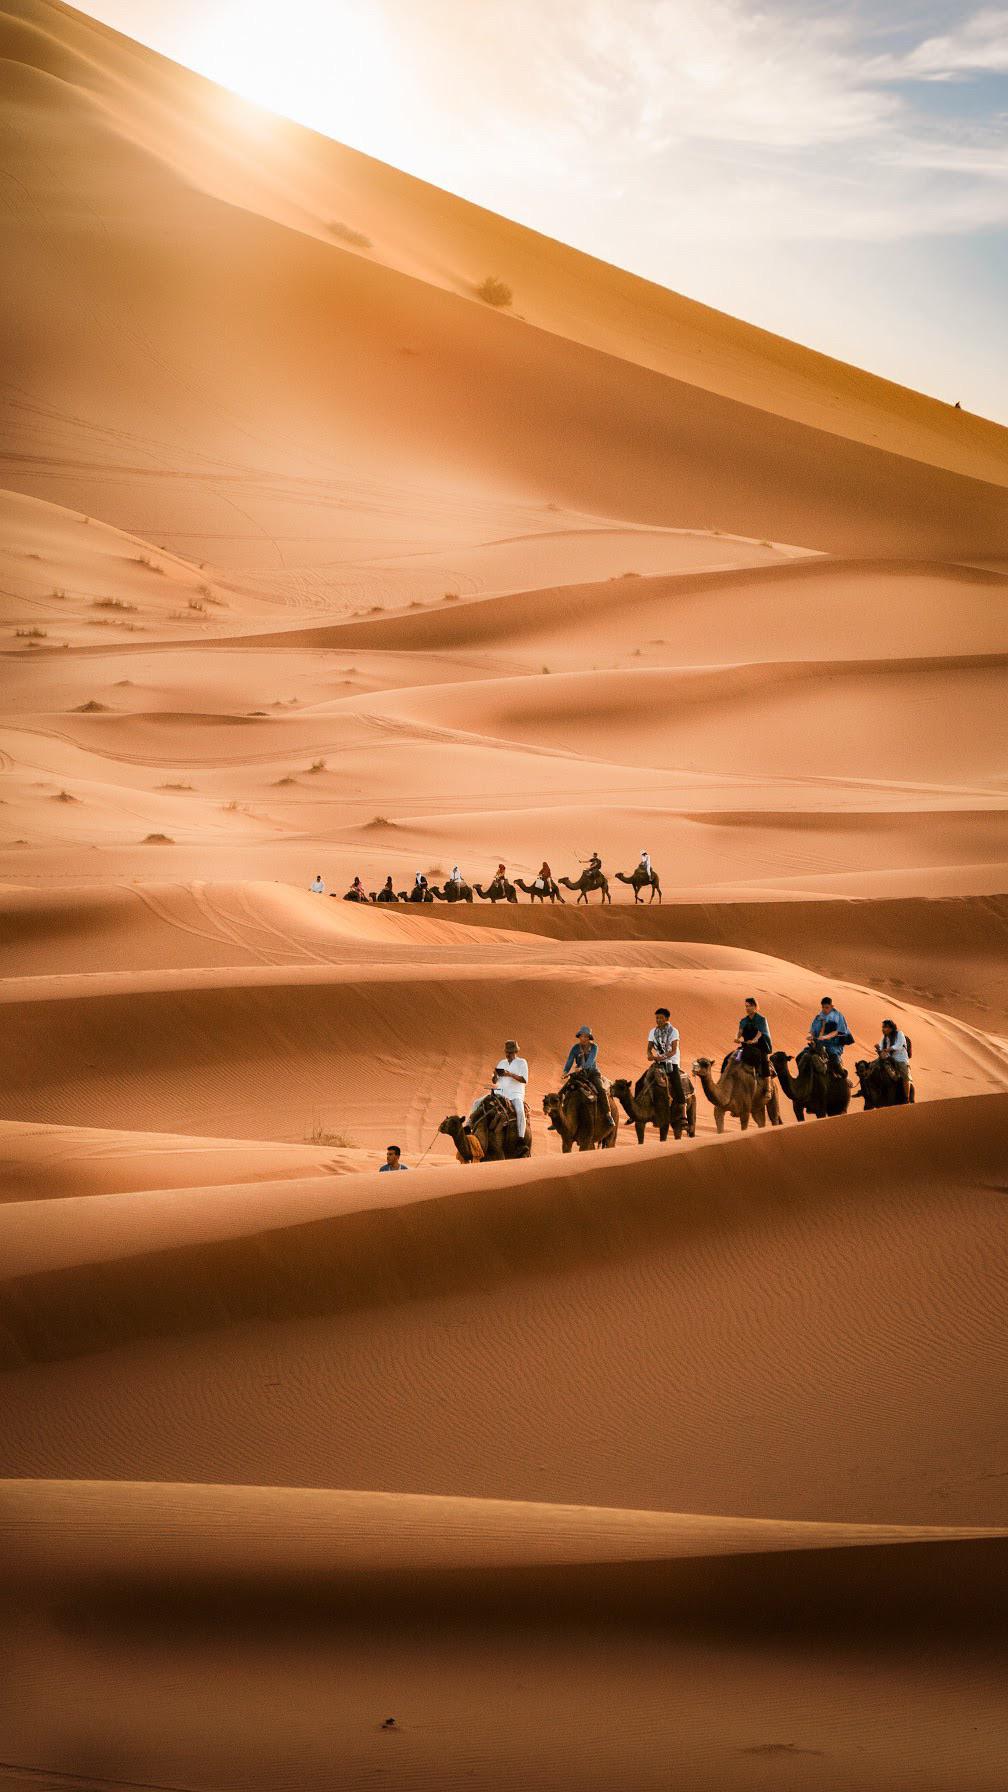 My trip to the Sahara desert